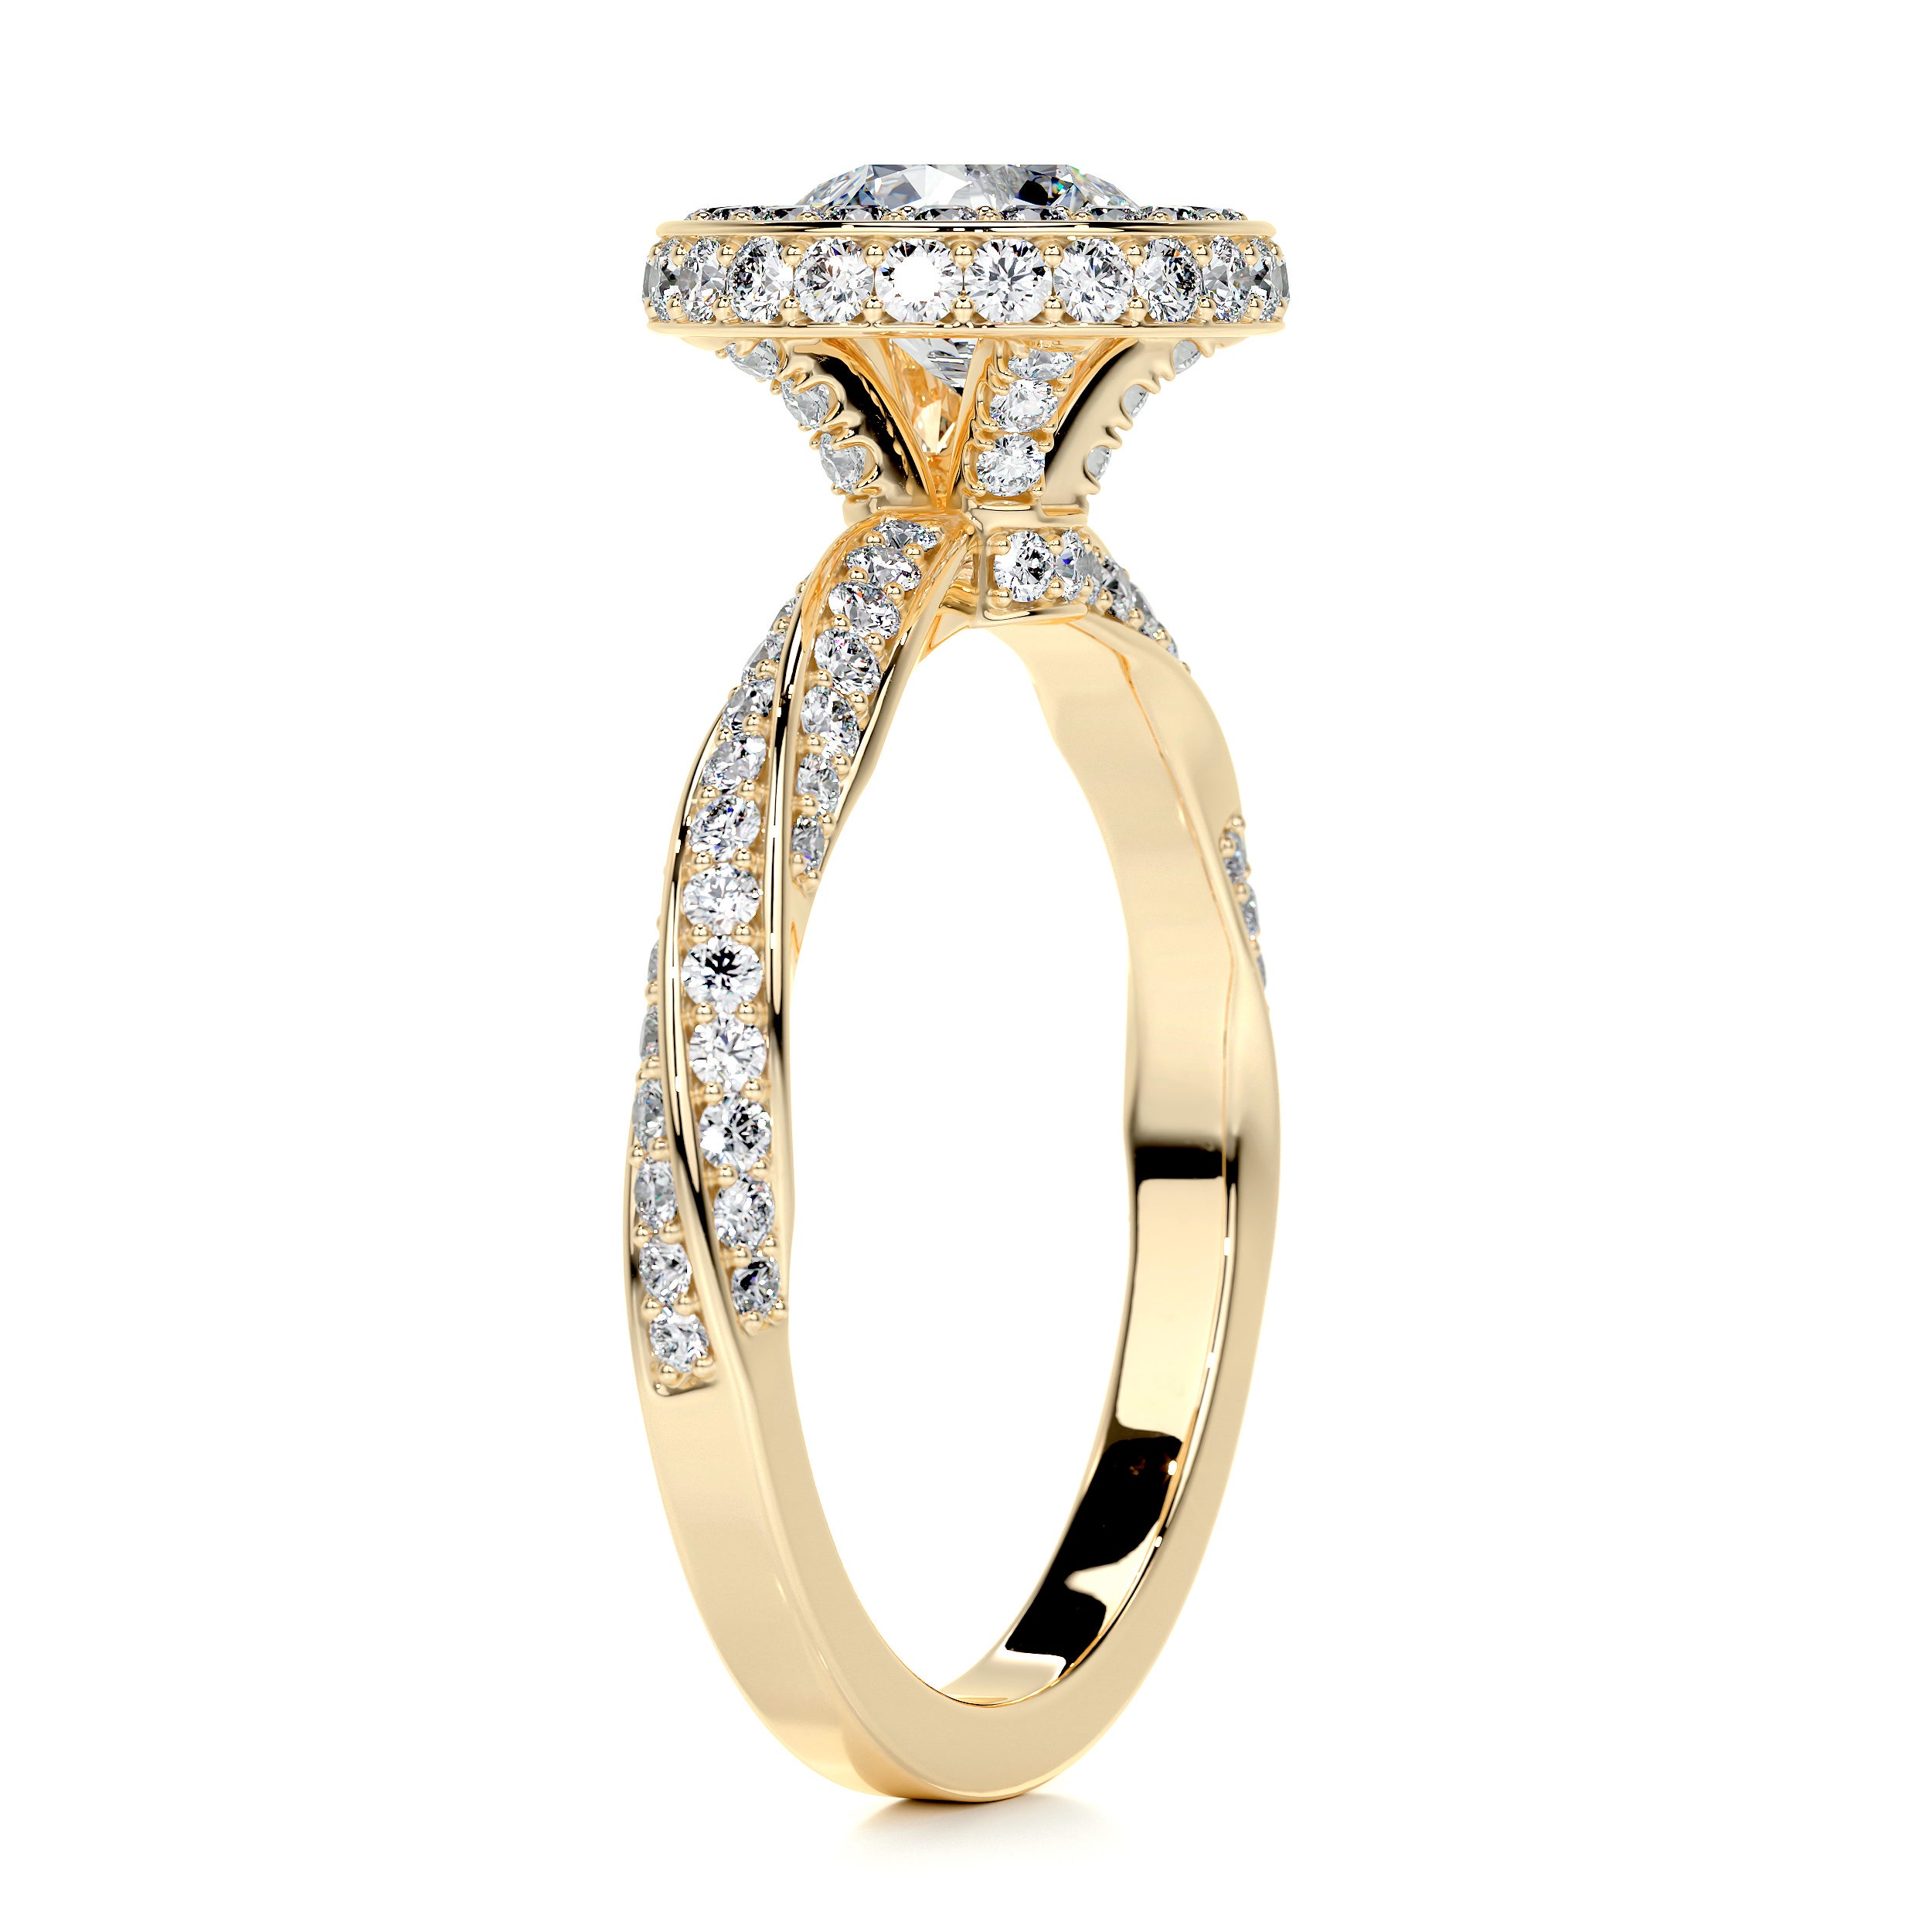 Sarina Diamond Engagement Ring   (1.7 Carat) -18K Yellow Gold